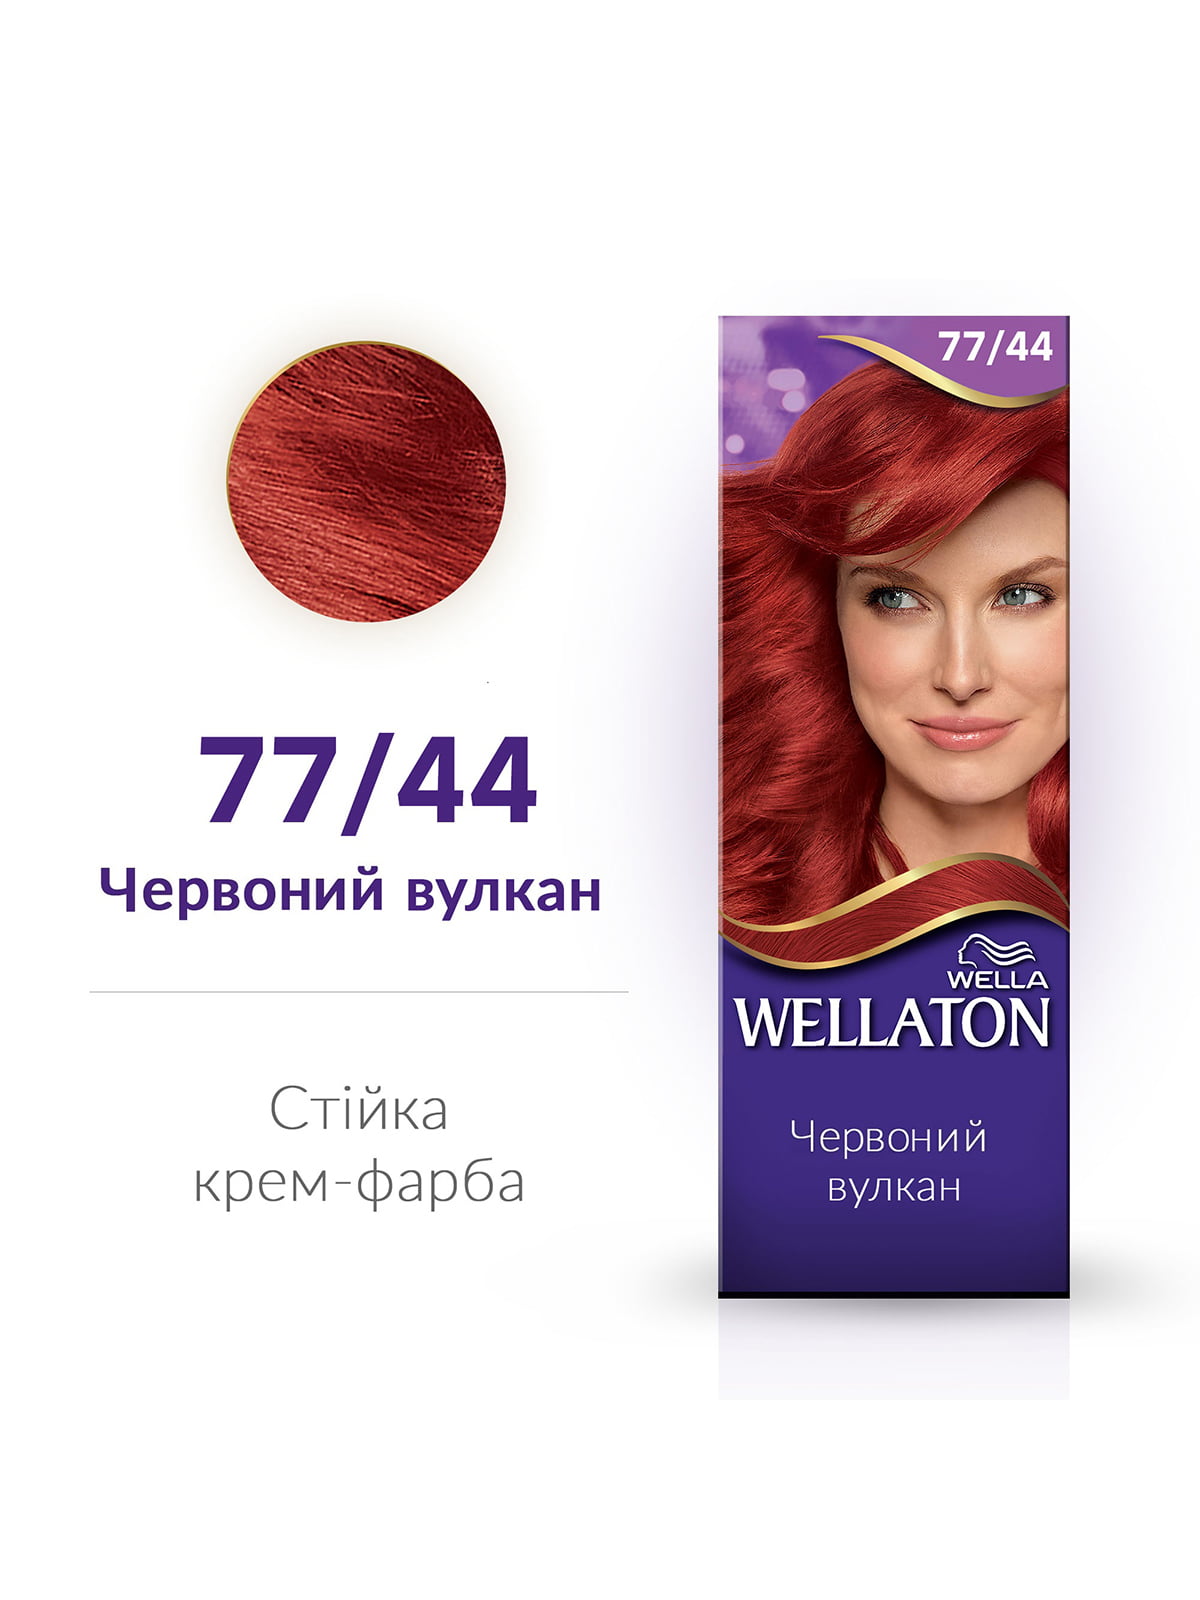 Wella Wellaton краска 77/44